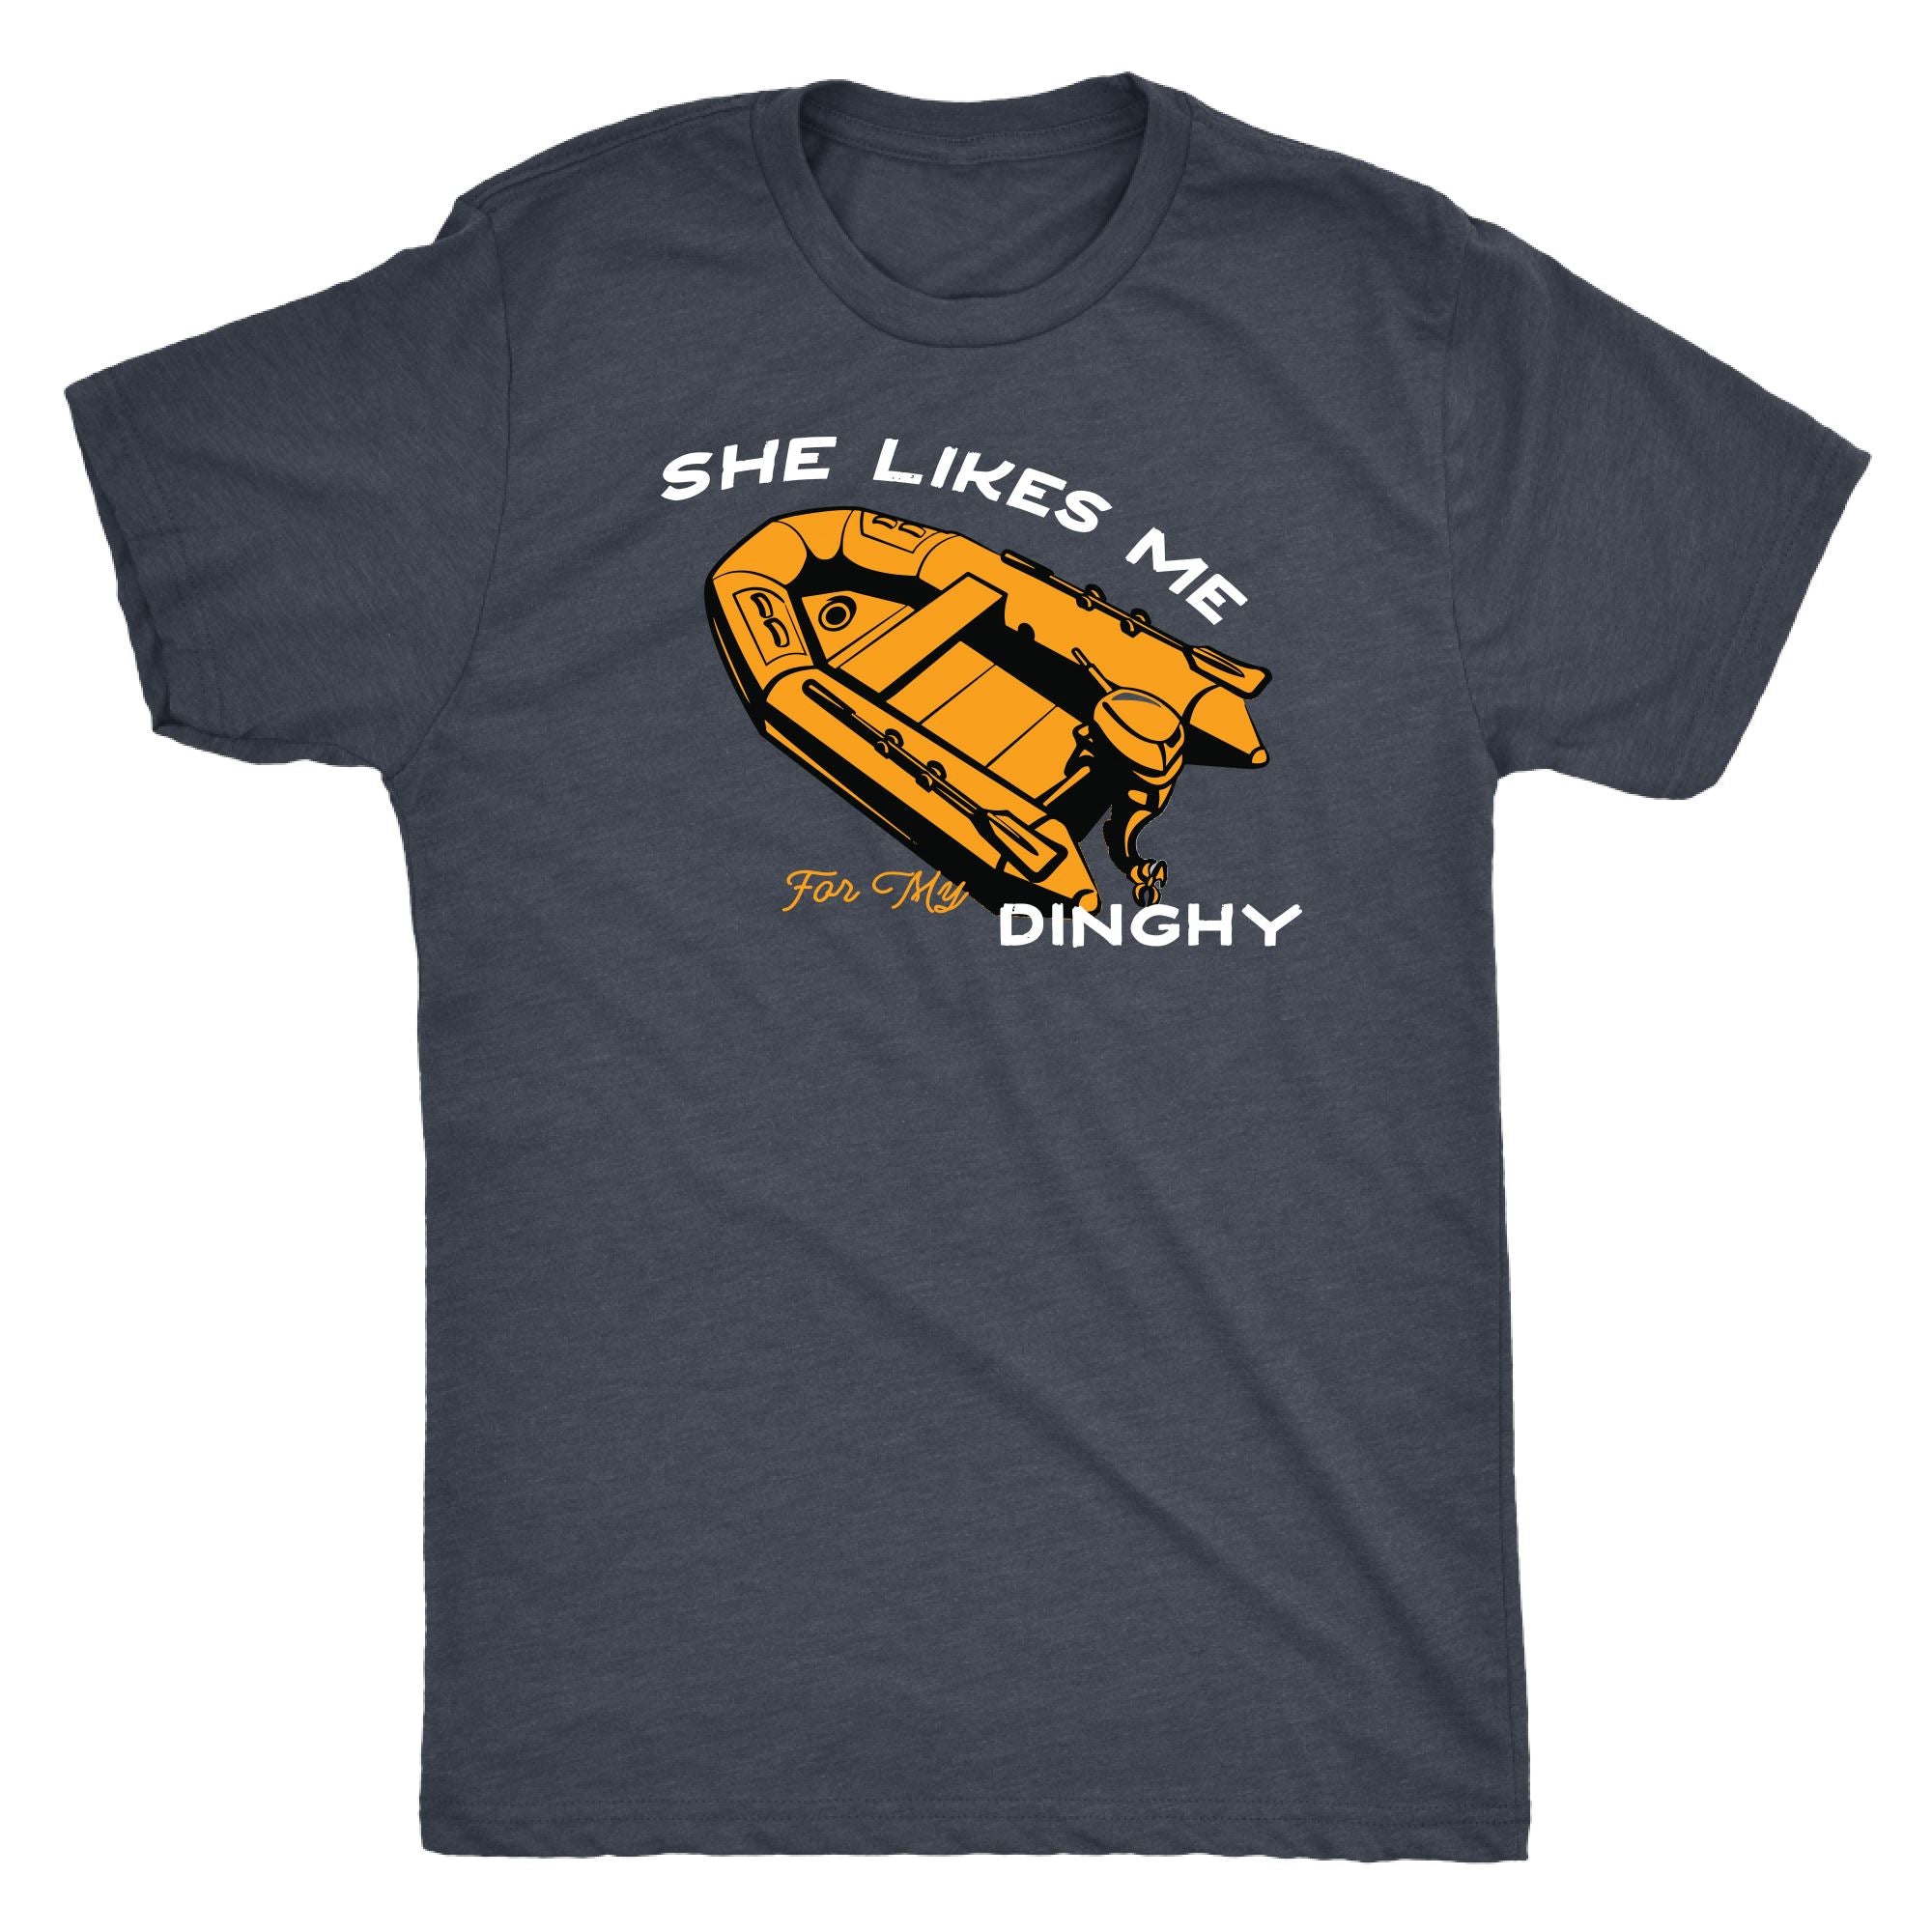 Couples Shirts - She Likes Me For My Dinghy, He Likes Me For My Porthole - Houseboat Kings